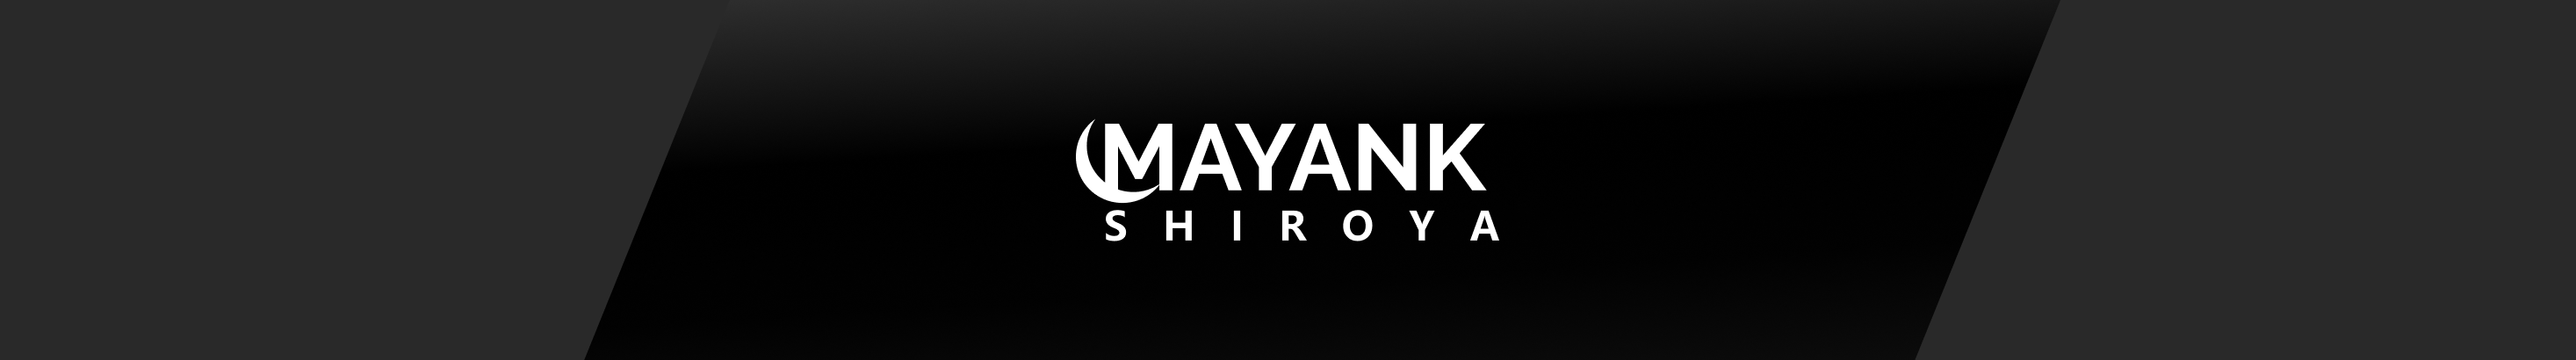 Bannière de profil de Mayank shiroya